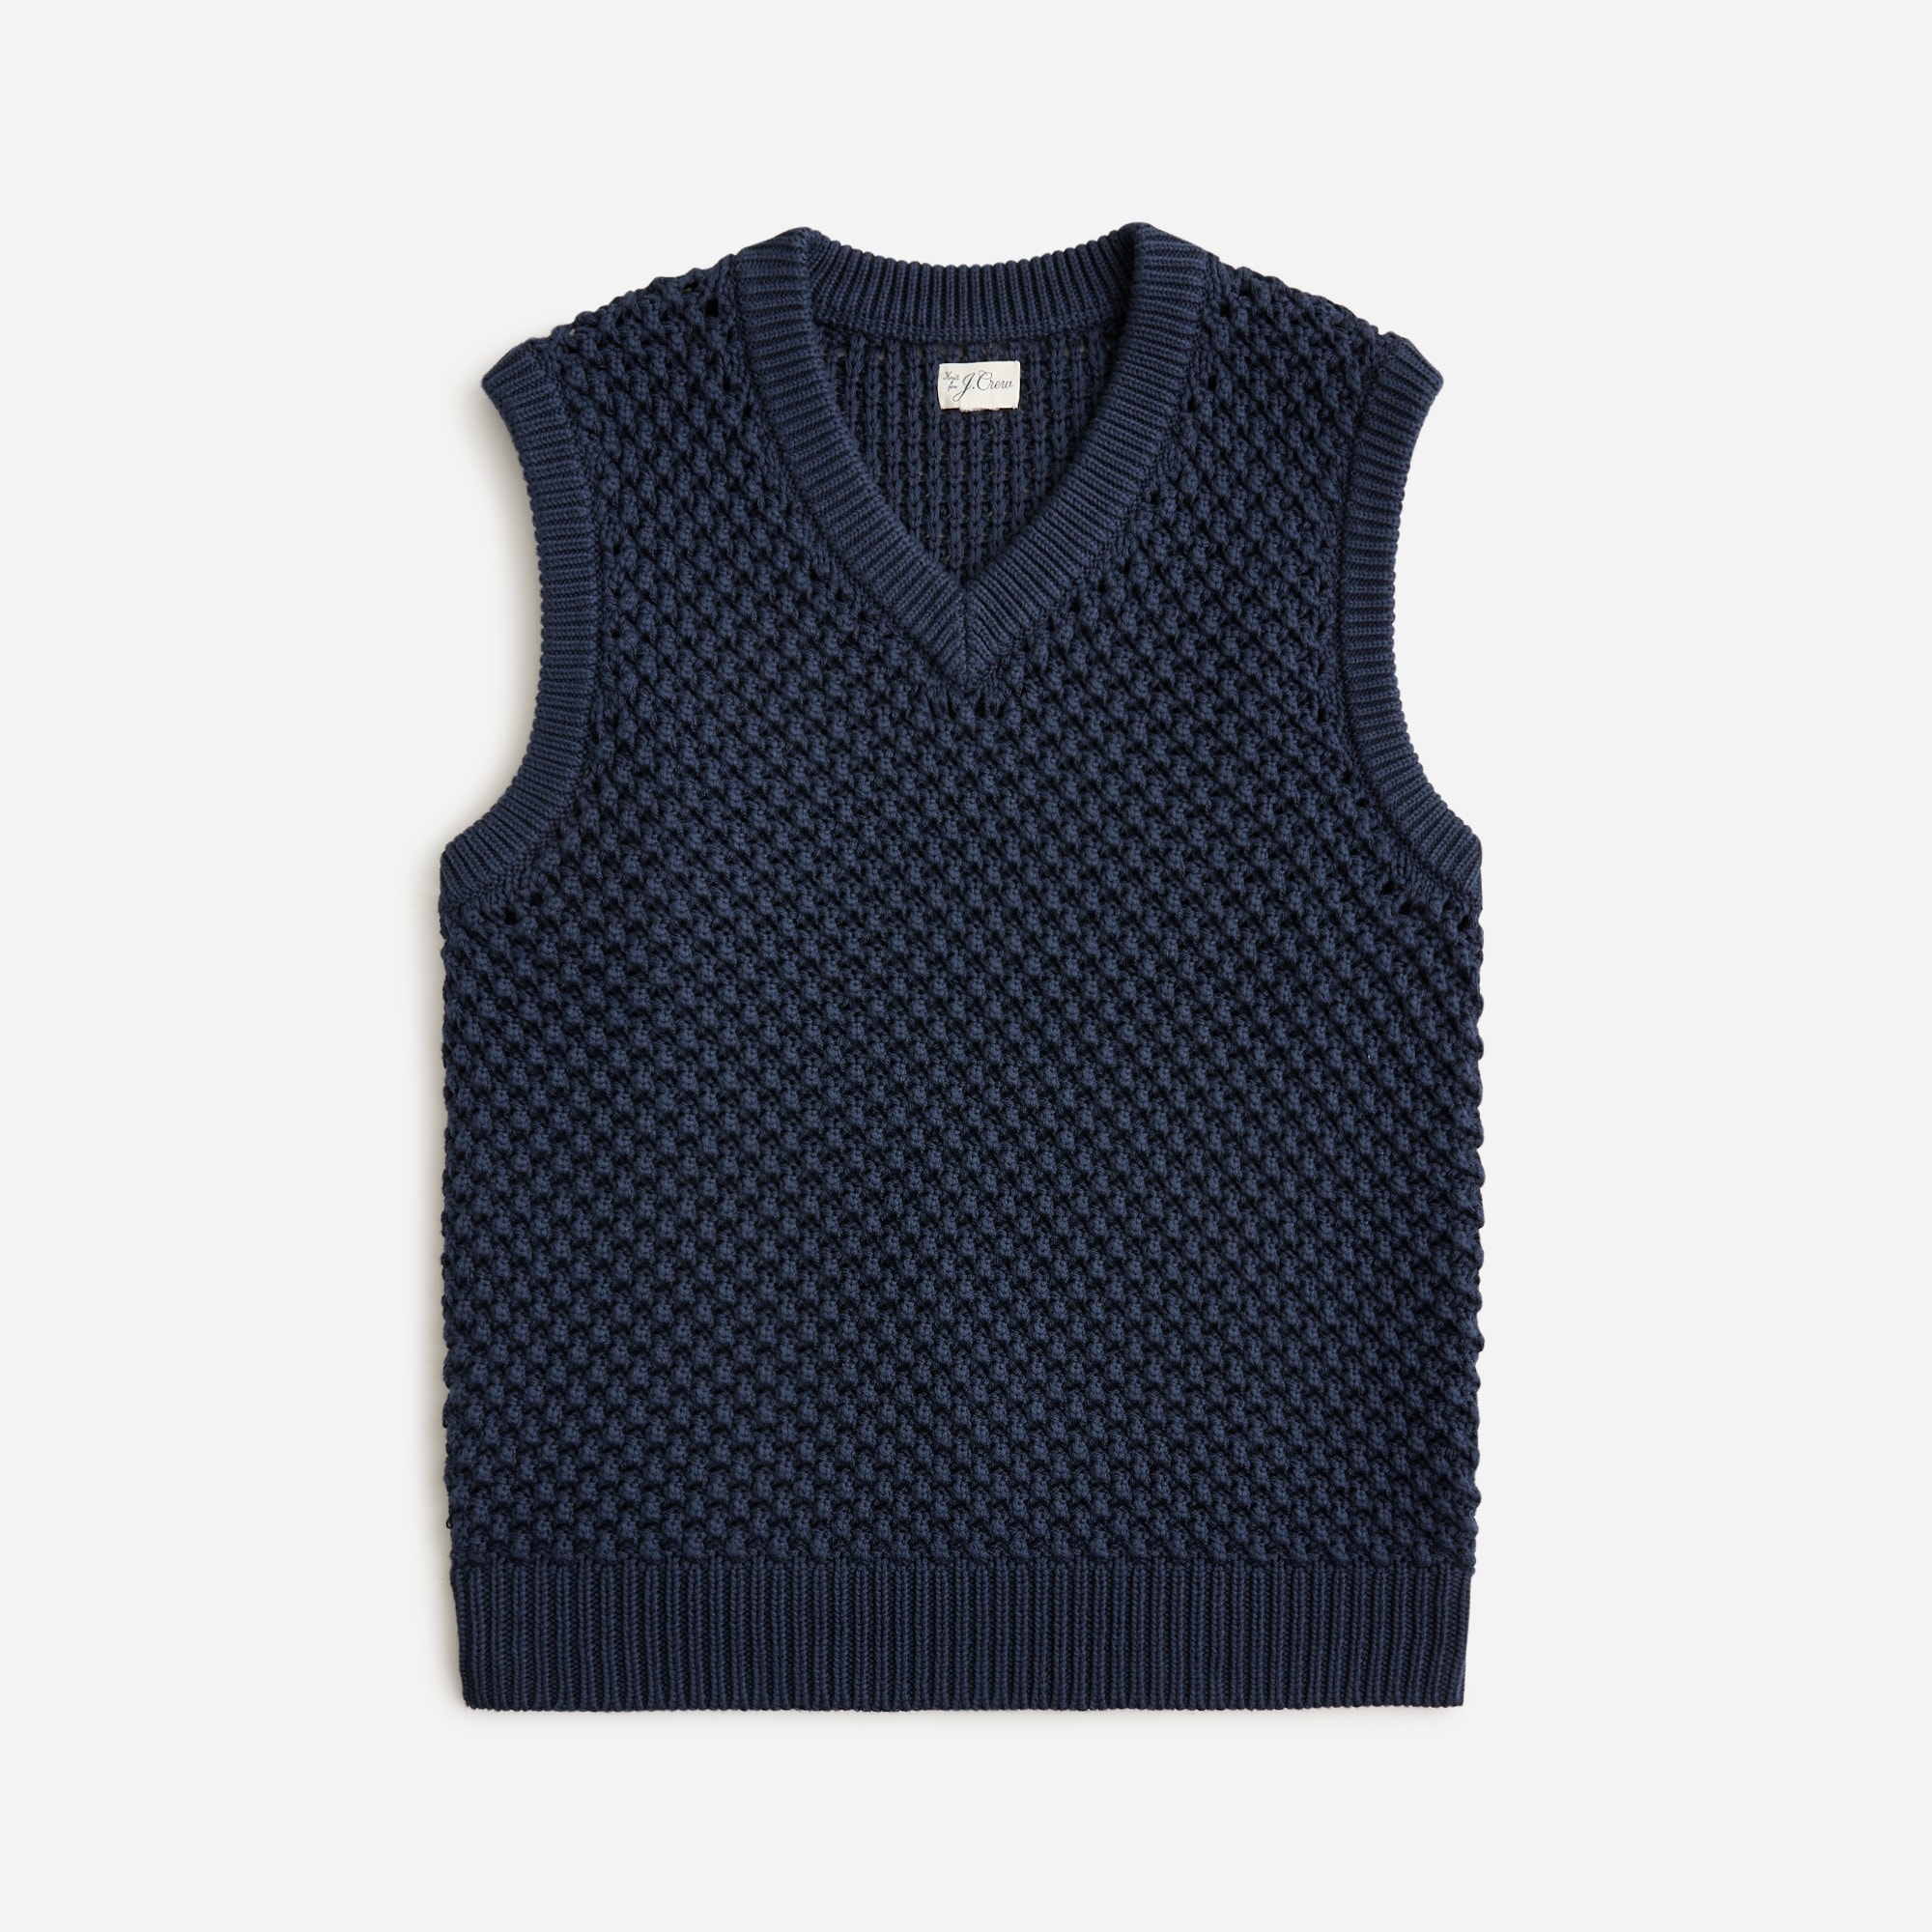  Cotton berry-stitch sweater-vest